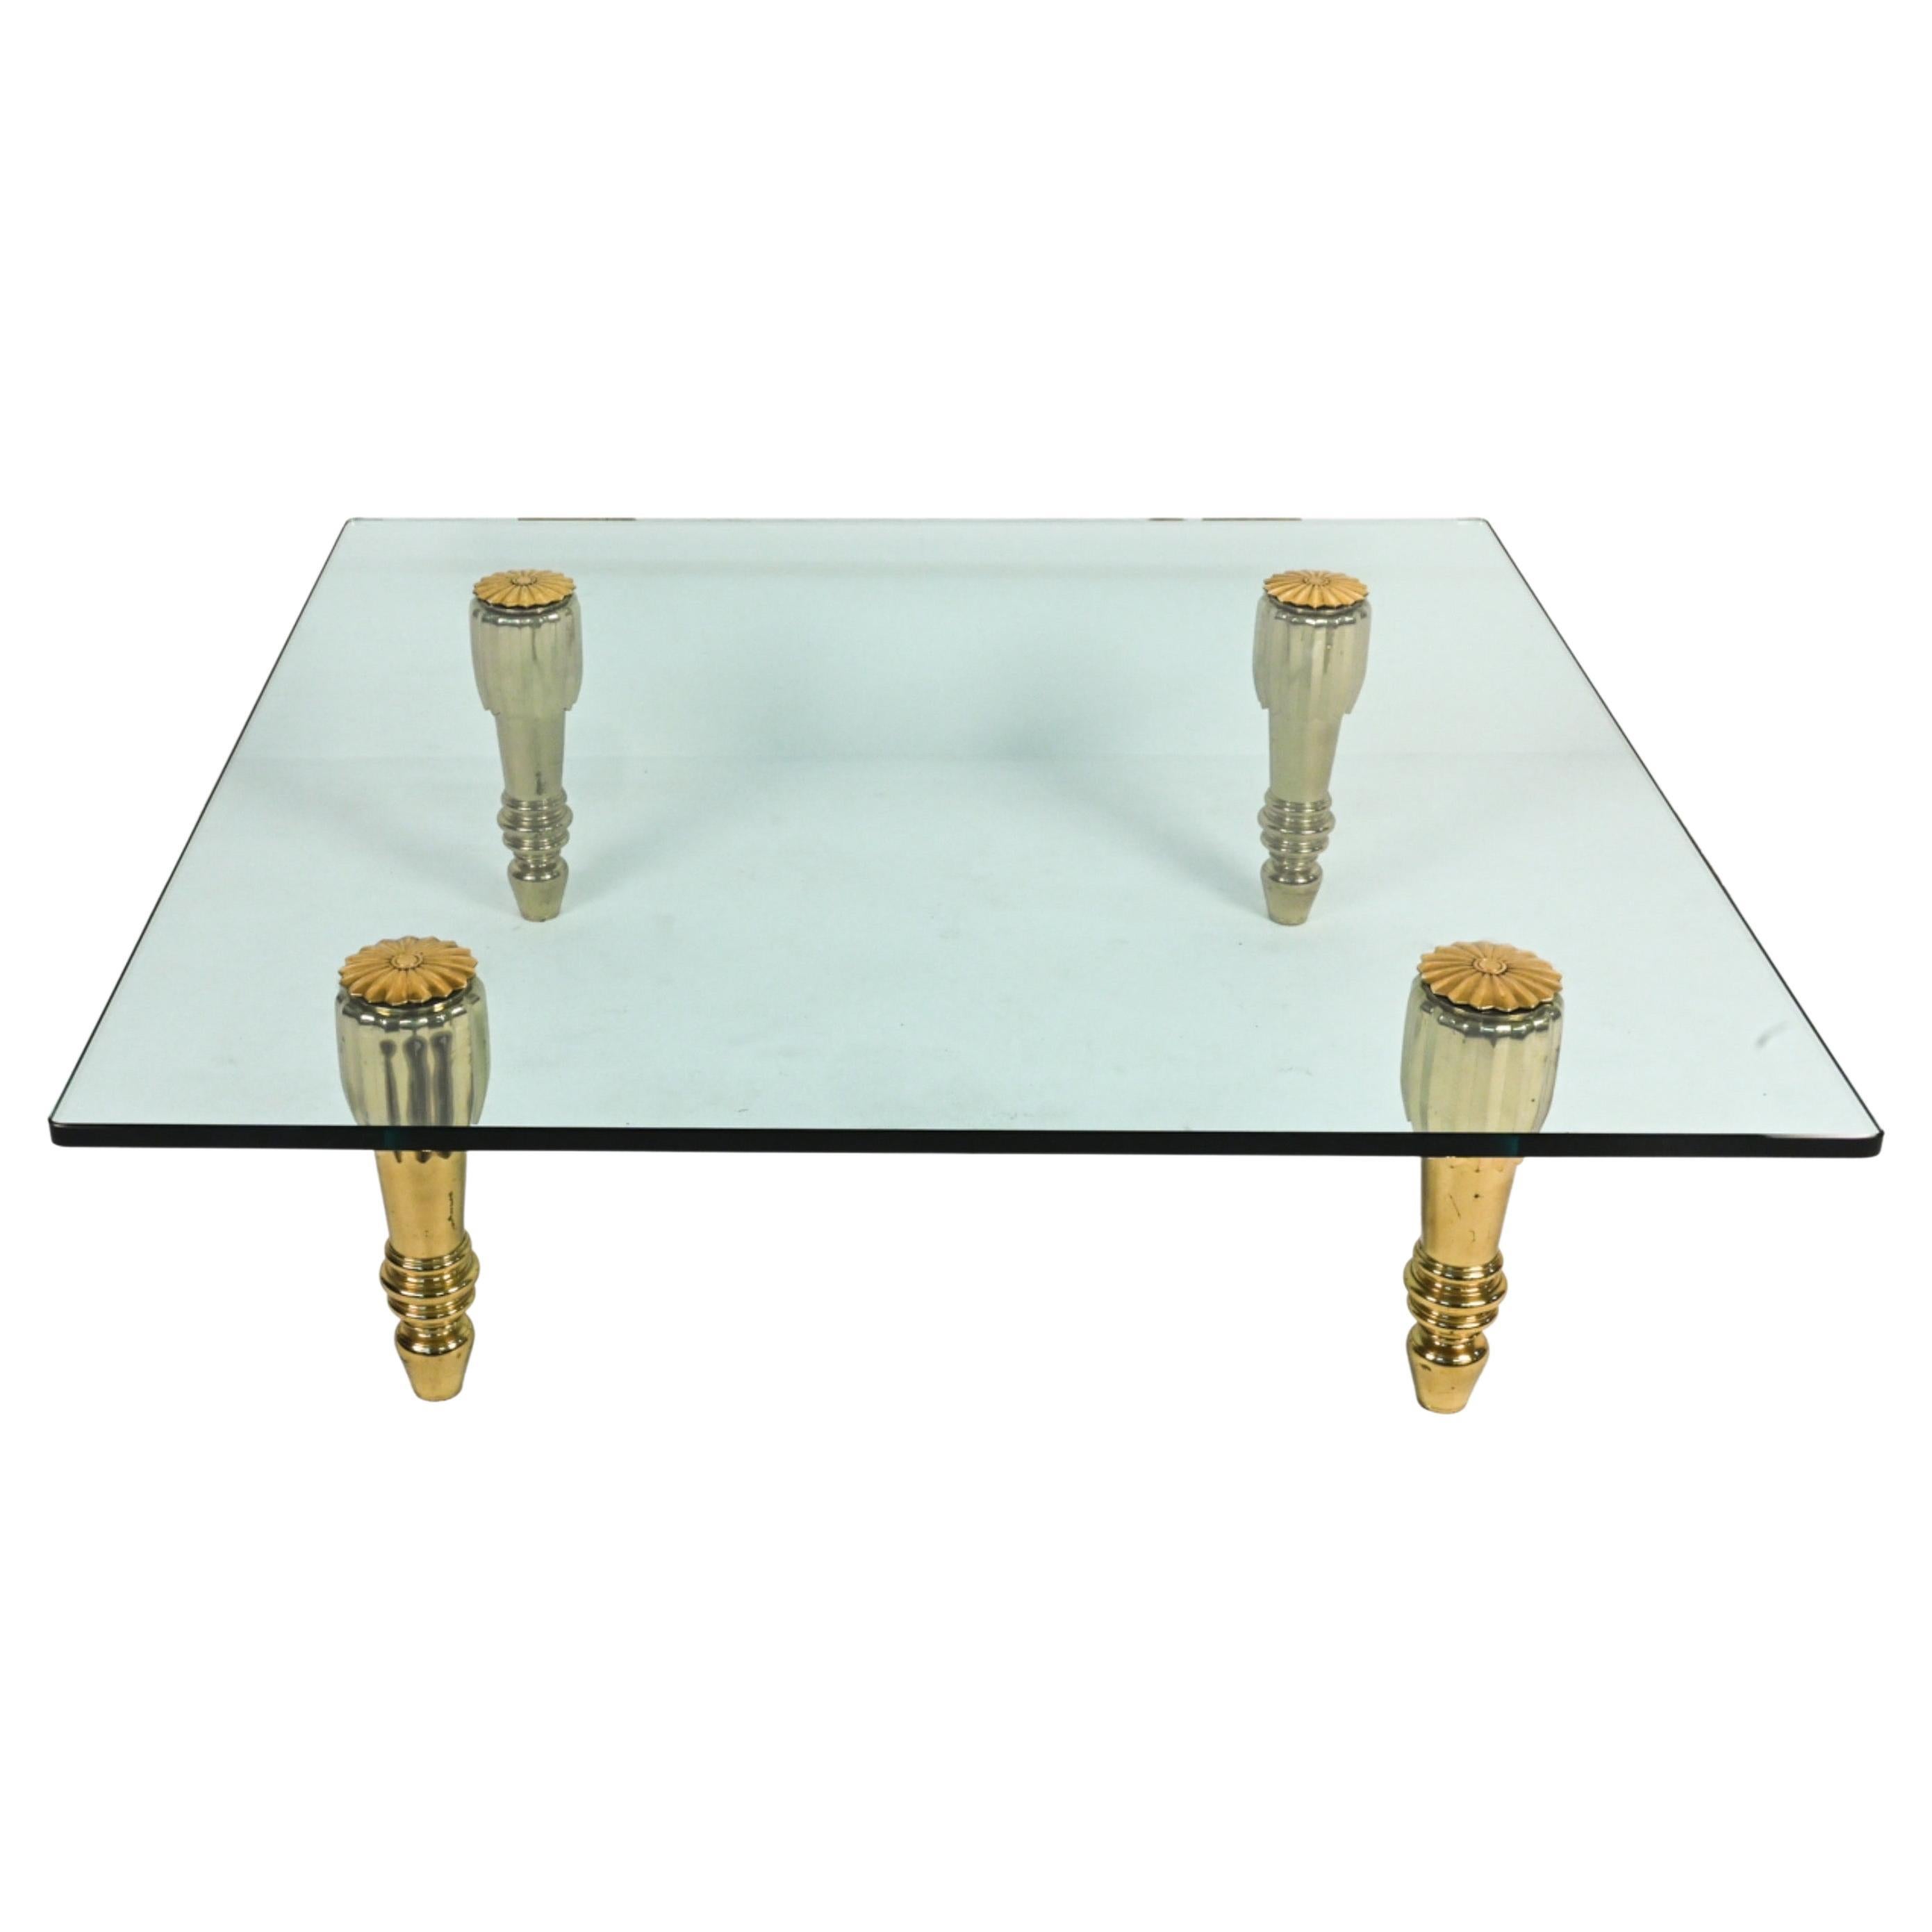  Grande table basse carrée en verre de style Hollywood Regency avec pieds en laiton  en vente